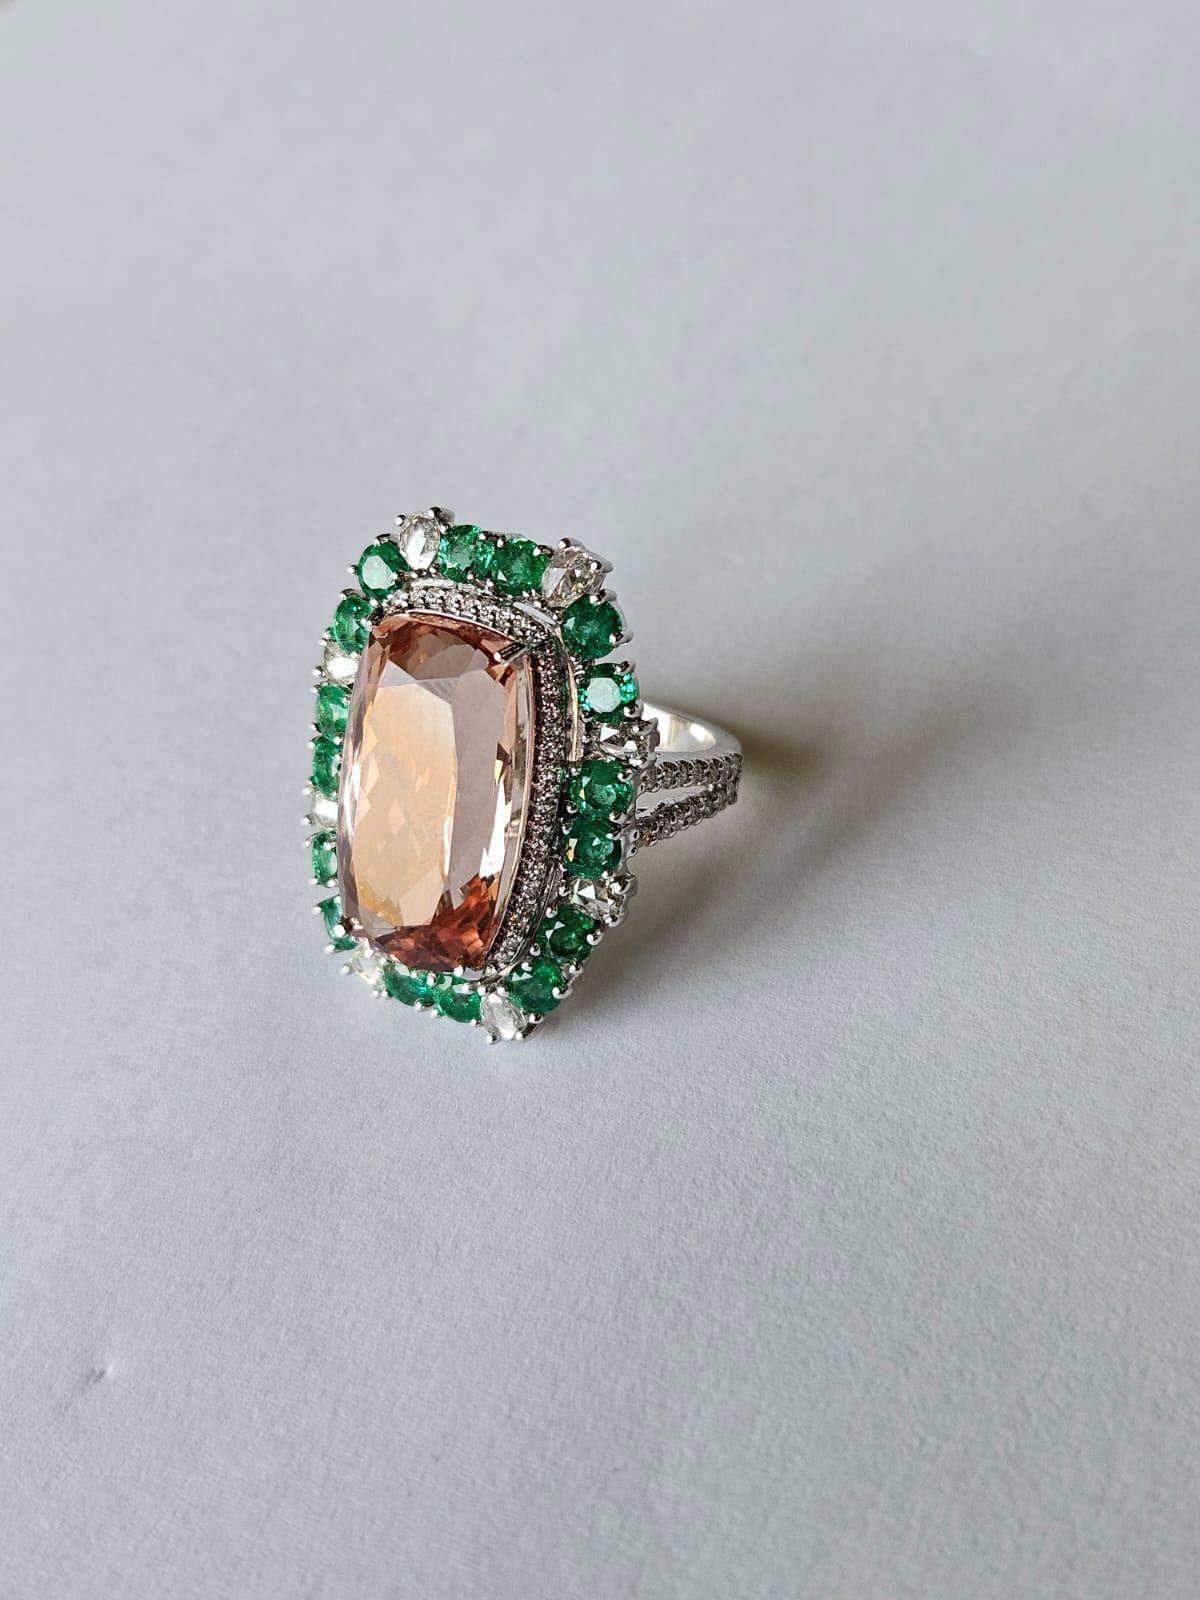 Cushion Cut Set in 18K Gold, 13.37 carat Morganite, Emerald & Rose cut Diamond Cocktail Ring For Sale